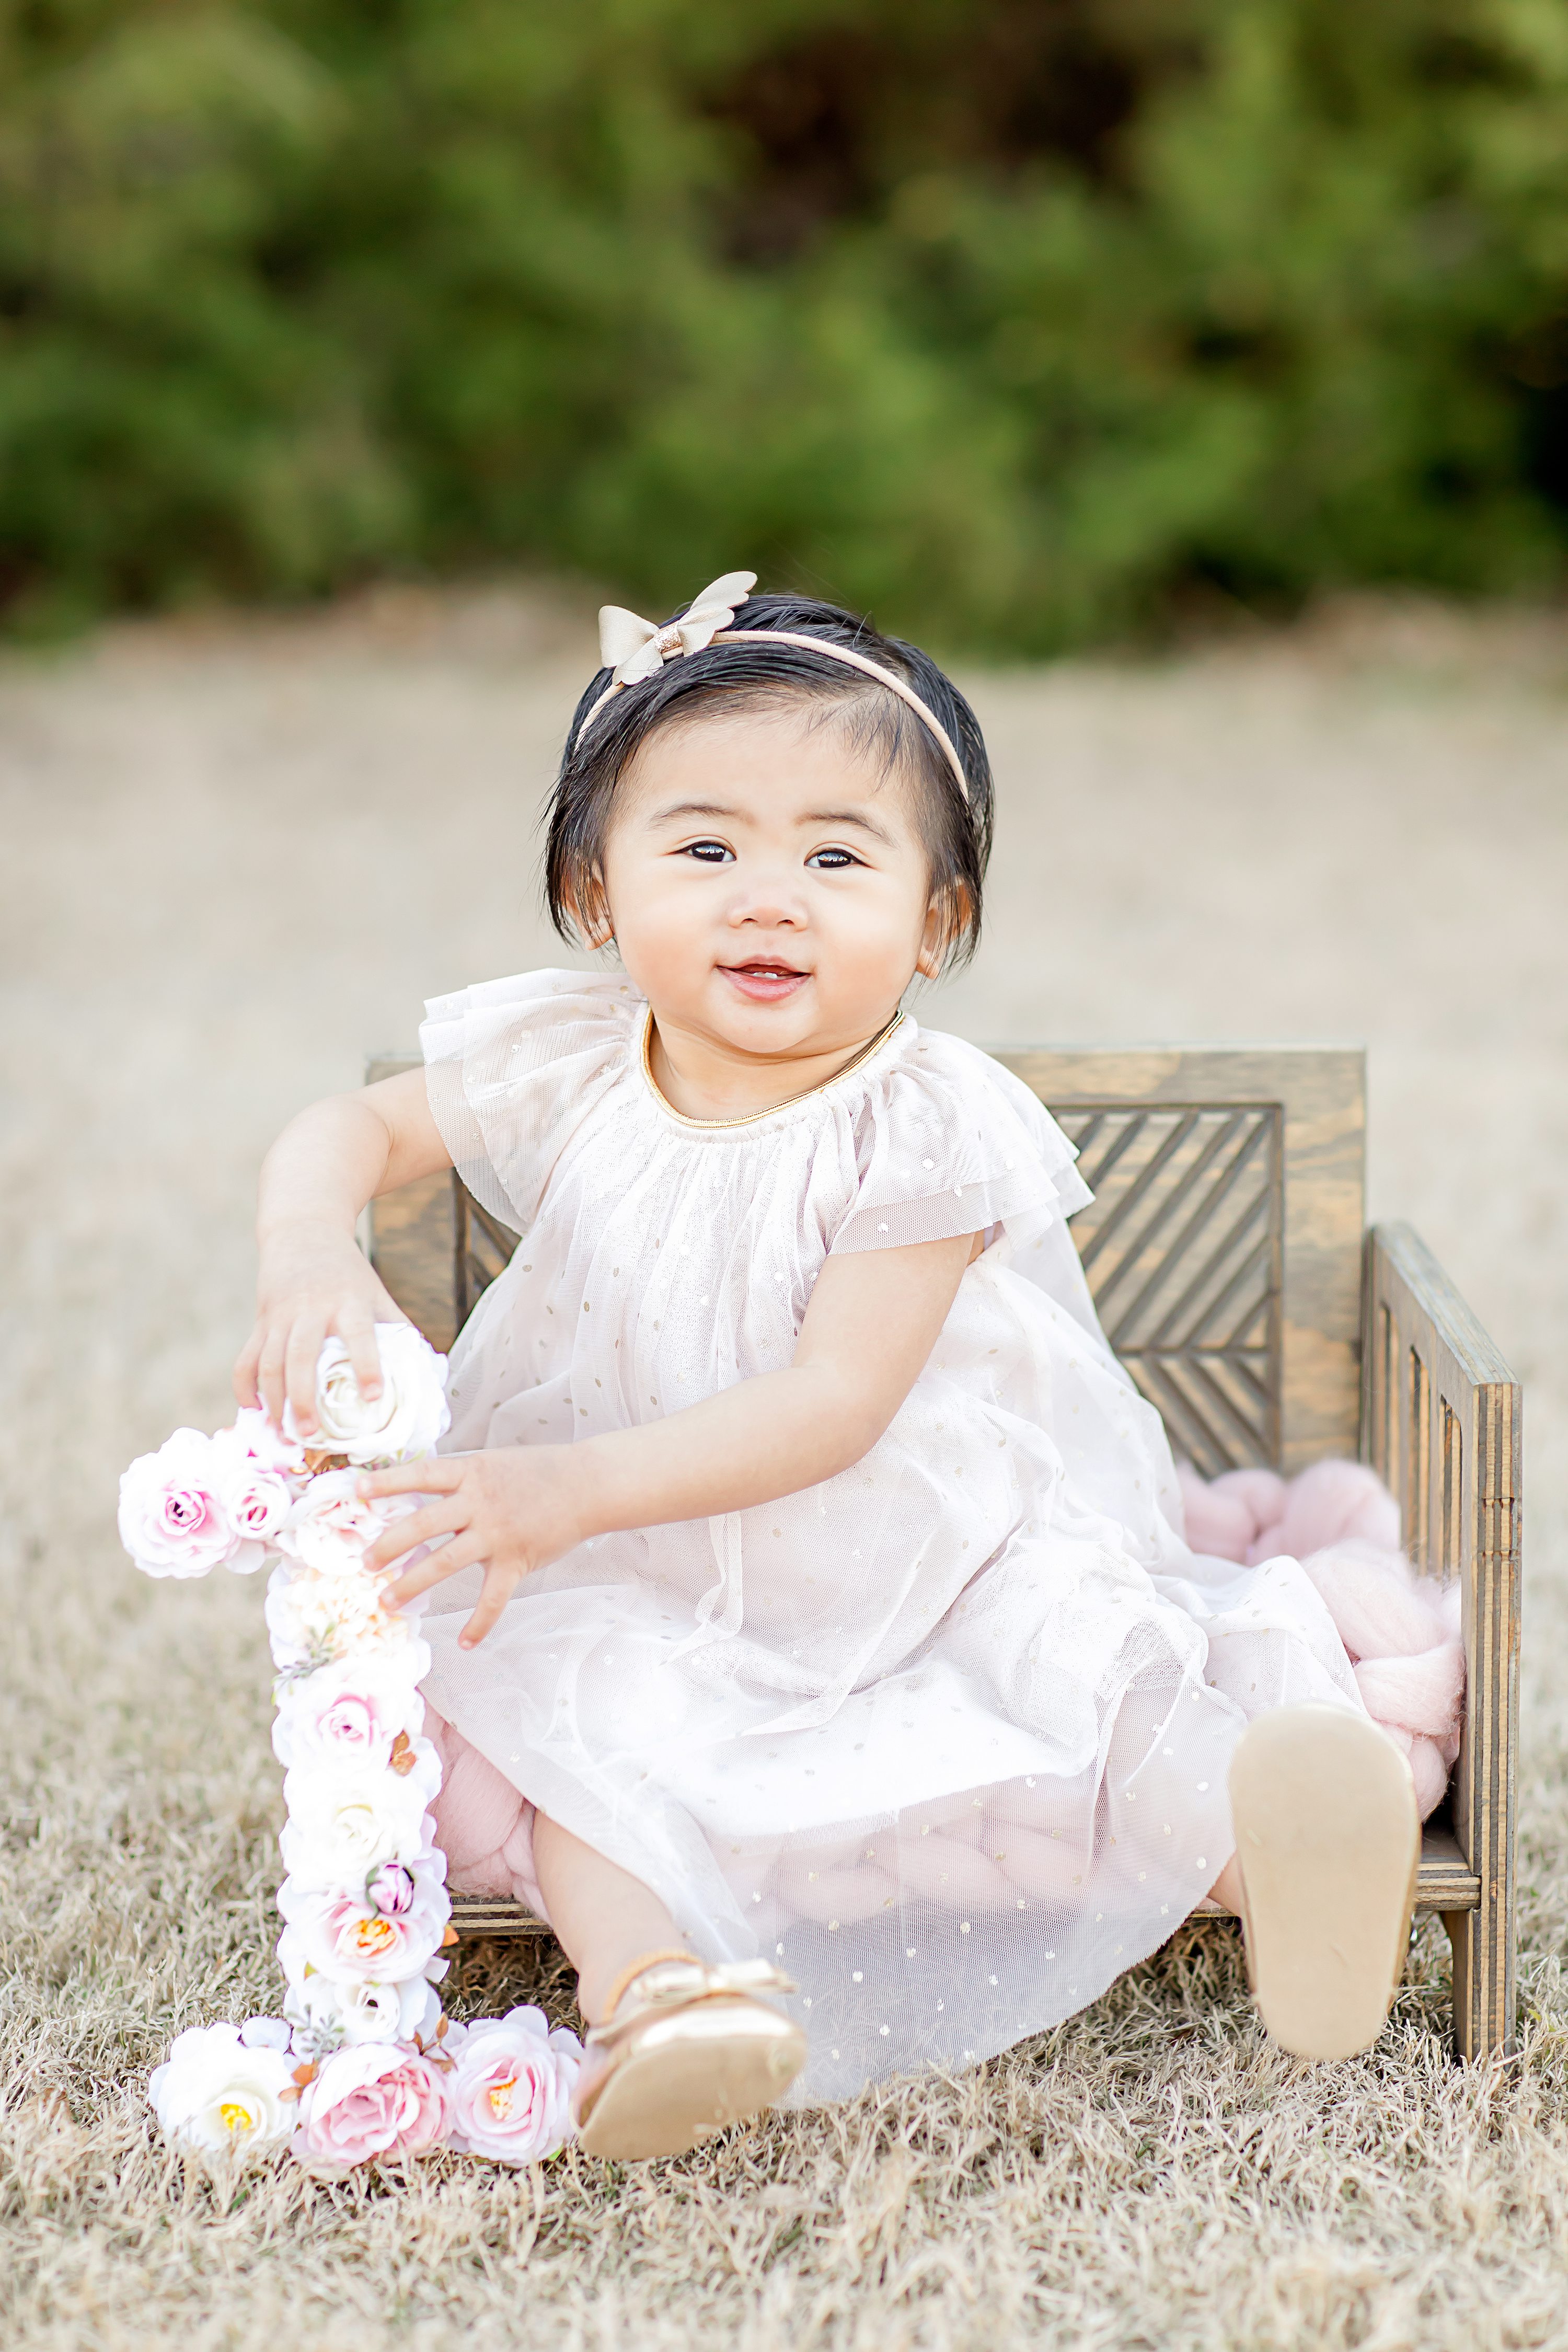 DFW Luxury Baby Photographer,First Birthday Photoshoot